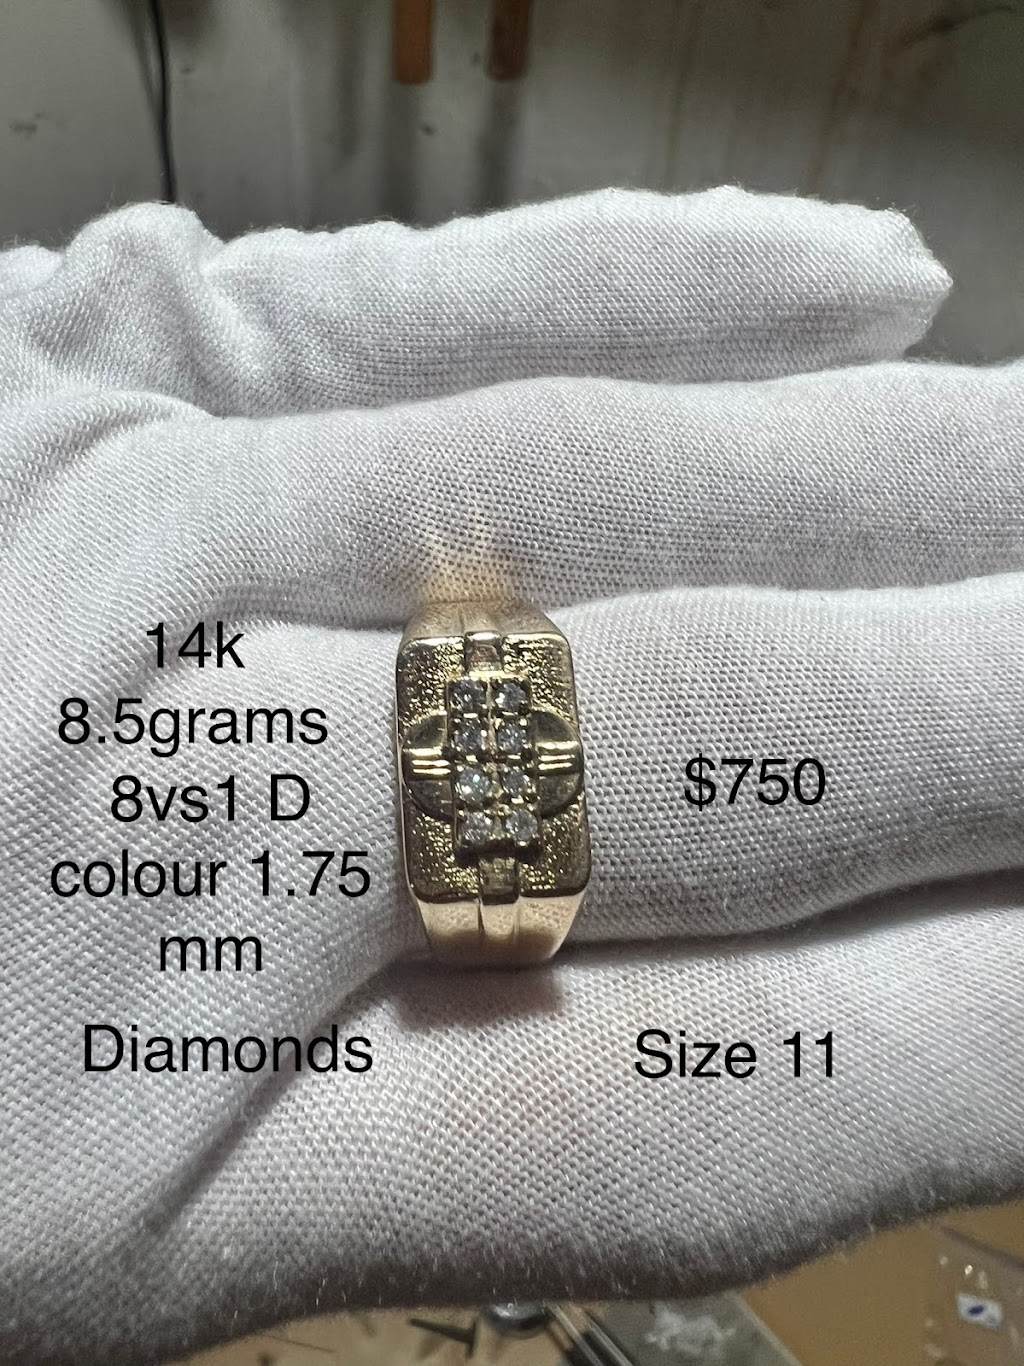 Royalty jewellers | 778 William St, Midland, ON L4R 4R8, Canada | Phone: (705) 433-1319